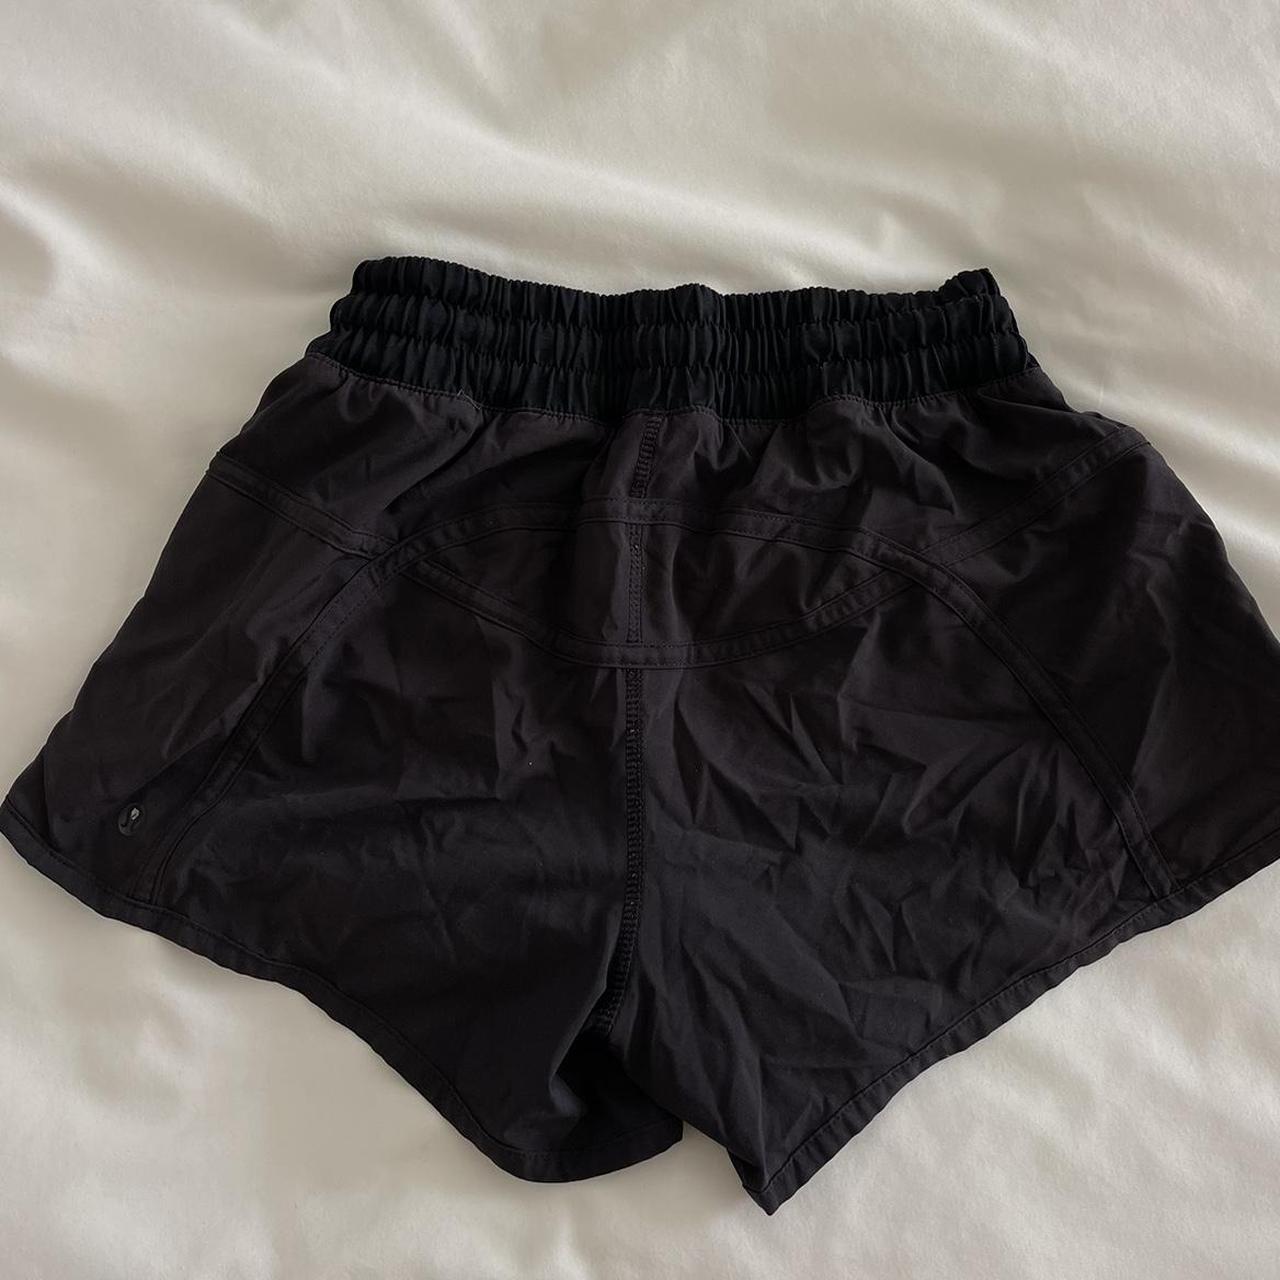 Lululemon black shorts - Depop